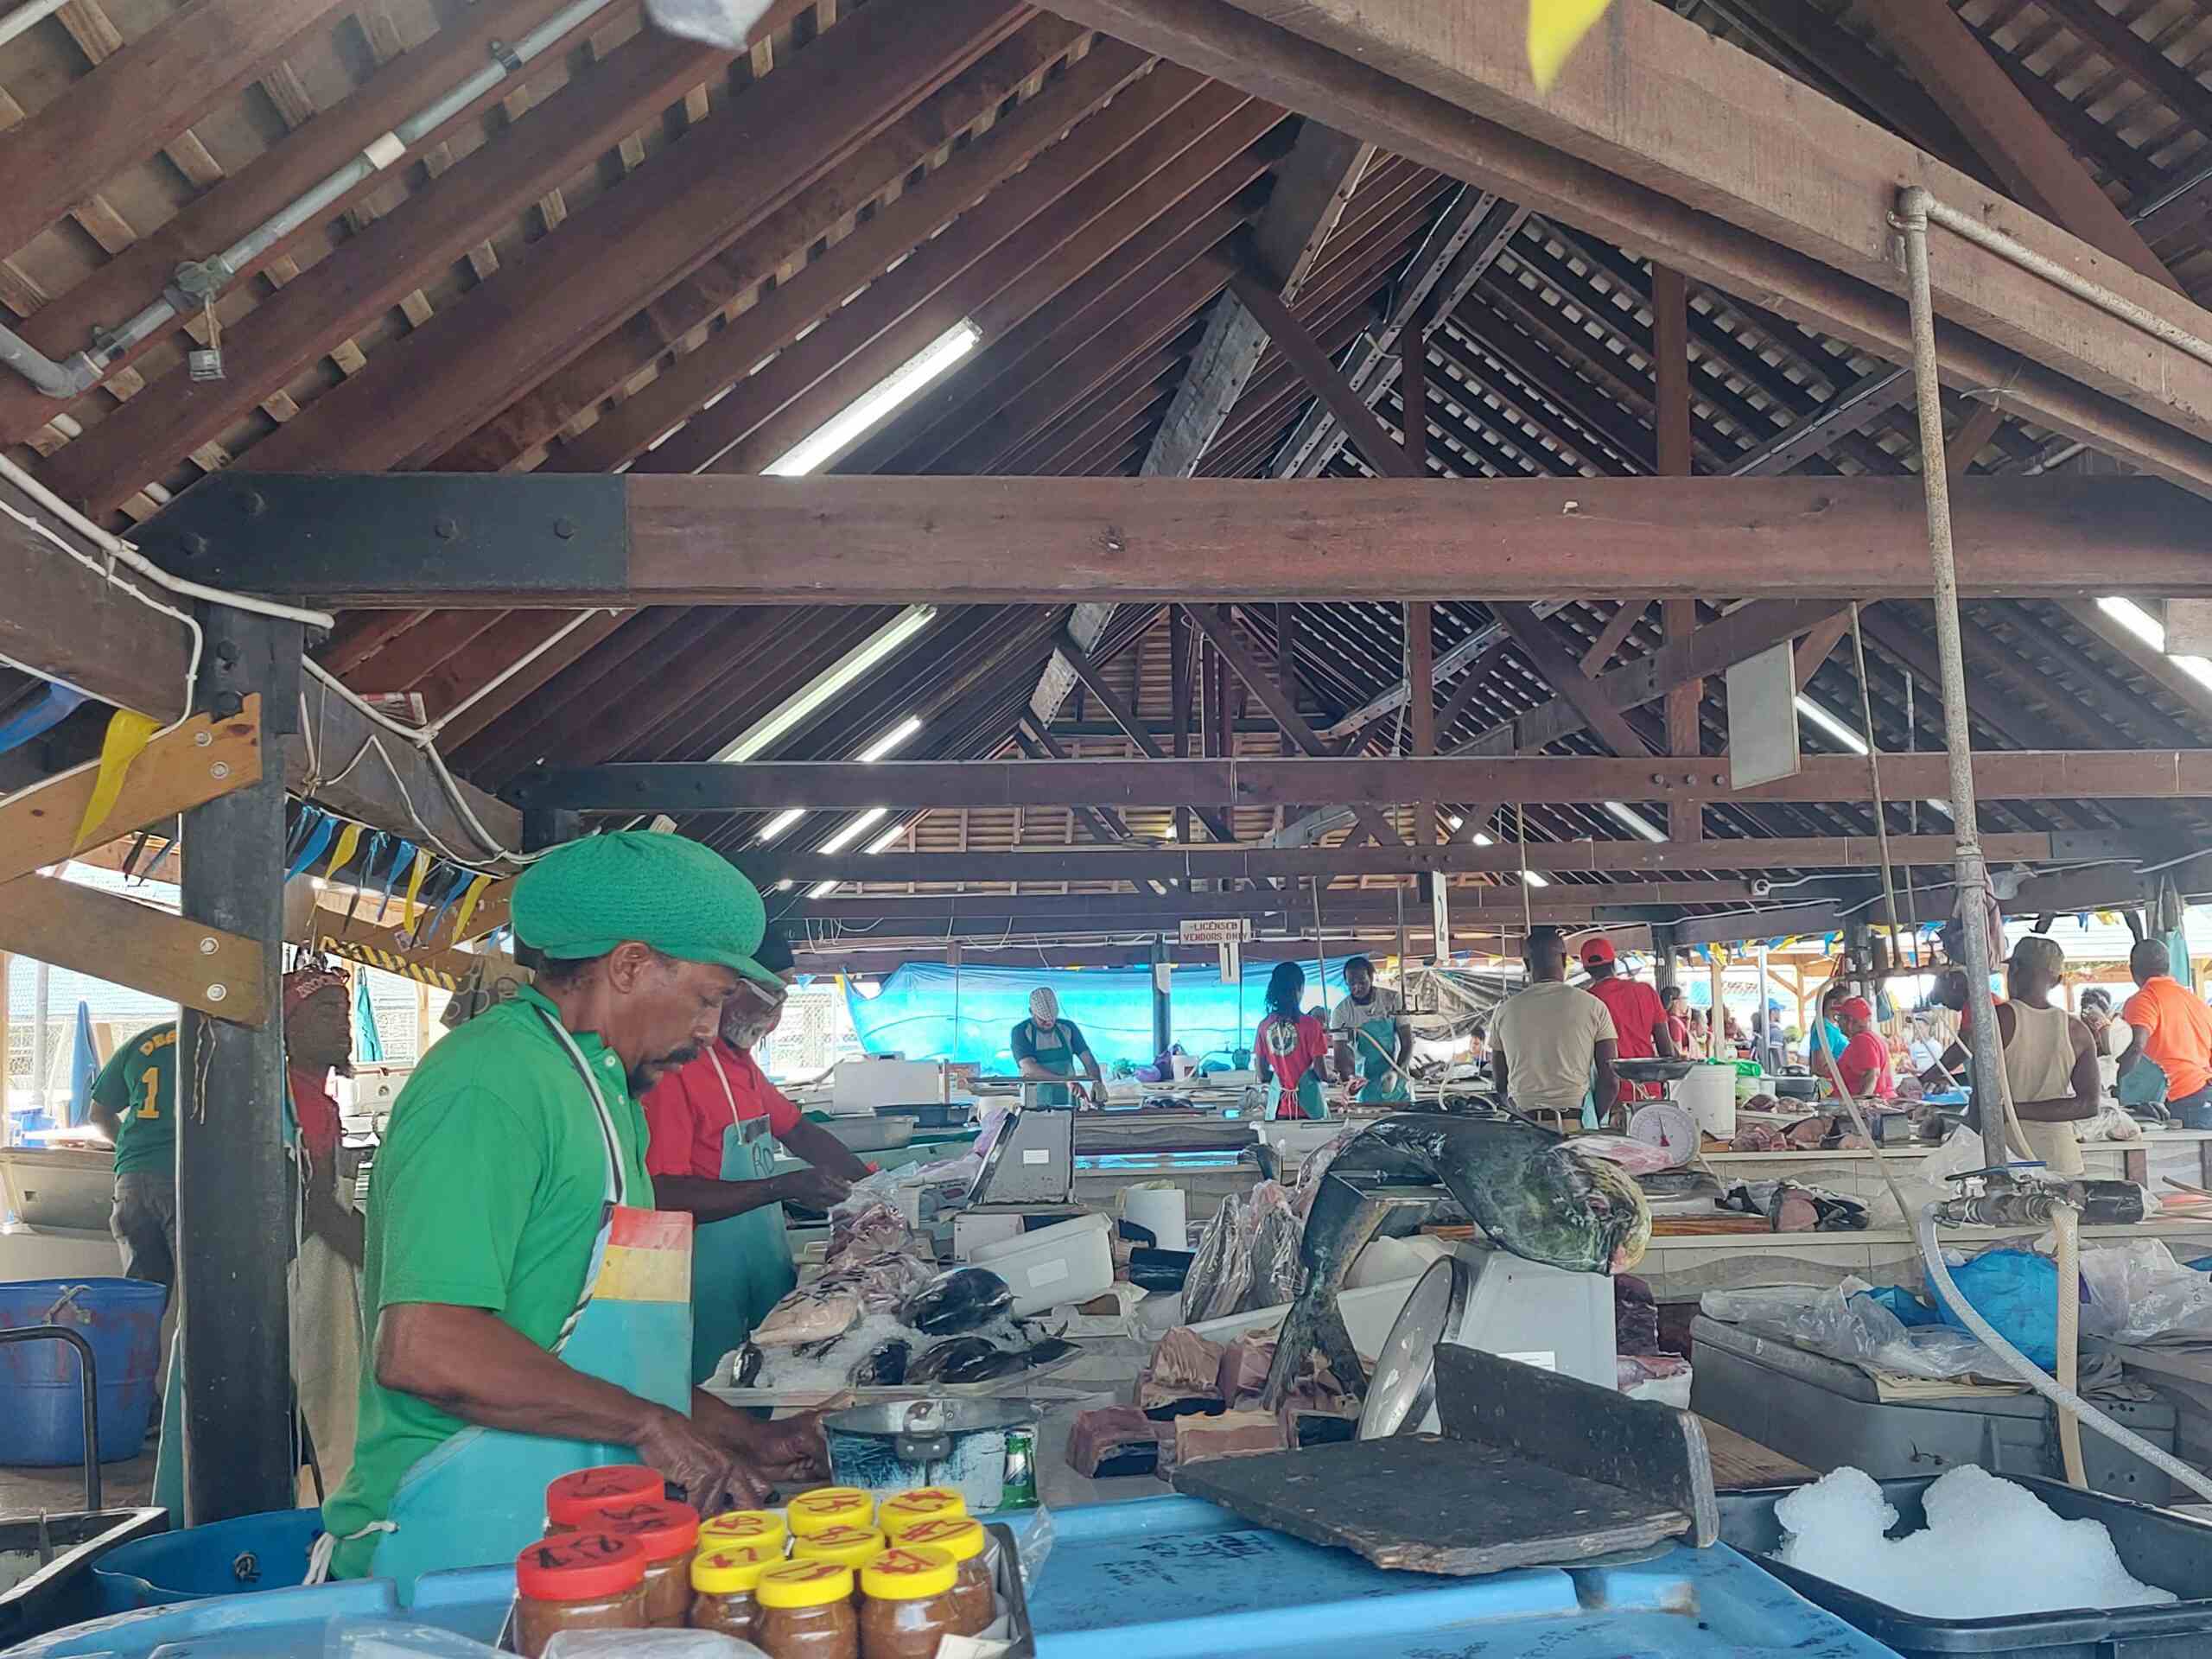 Oistins' Berinda Cox Fish Market Closed for Whit Monday Public Holiday